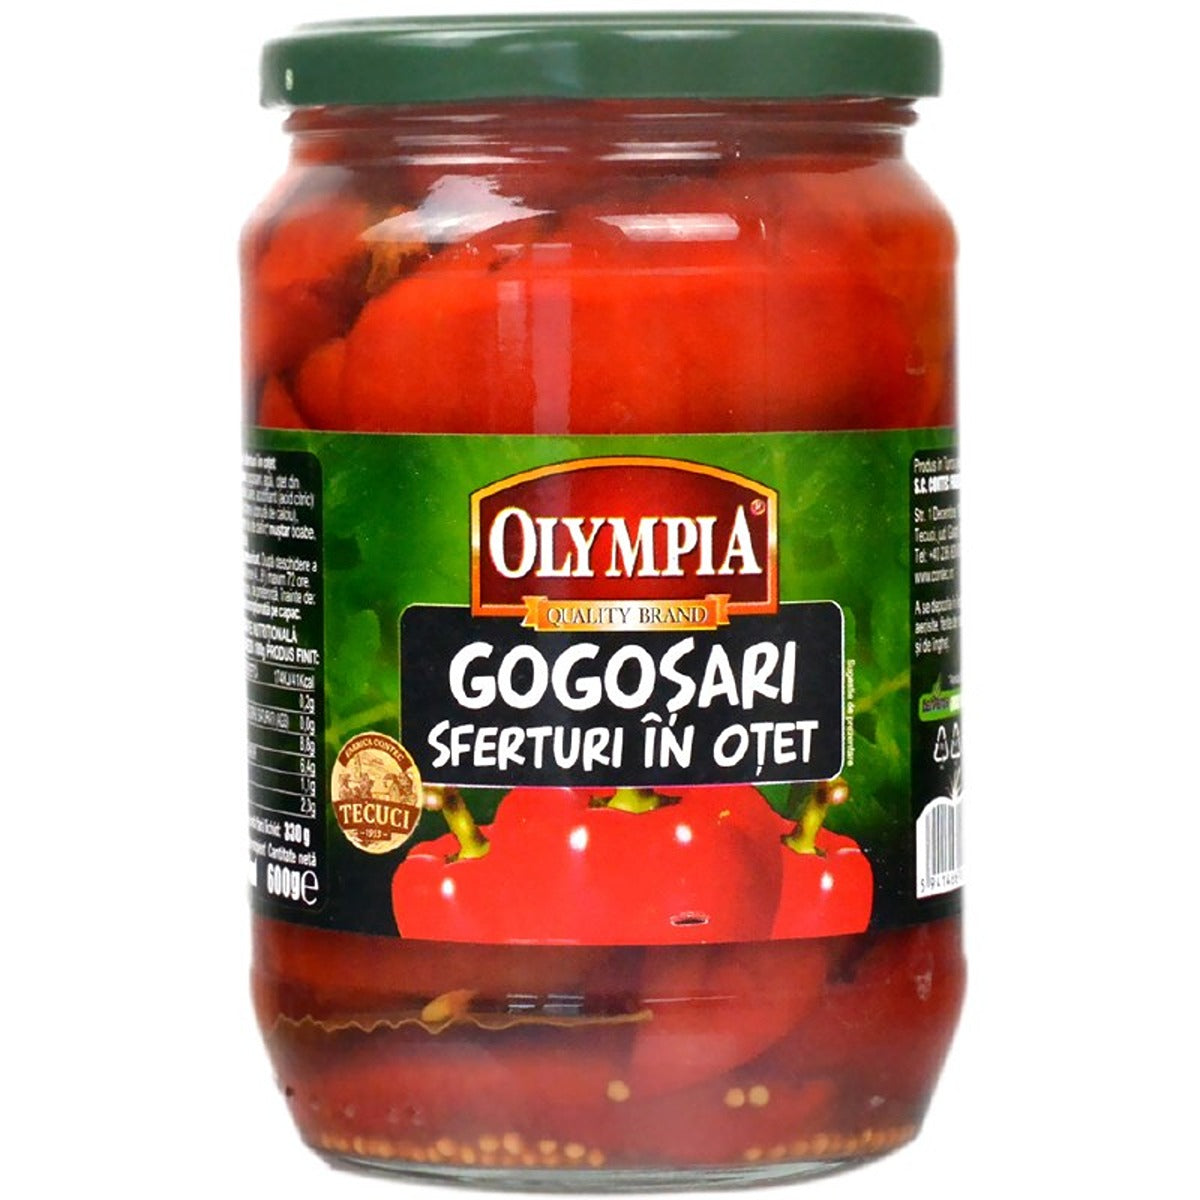 A jar of Olympia - Red Peppers in Vinegar - 600g sprite in ott.